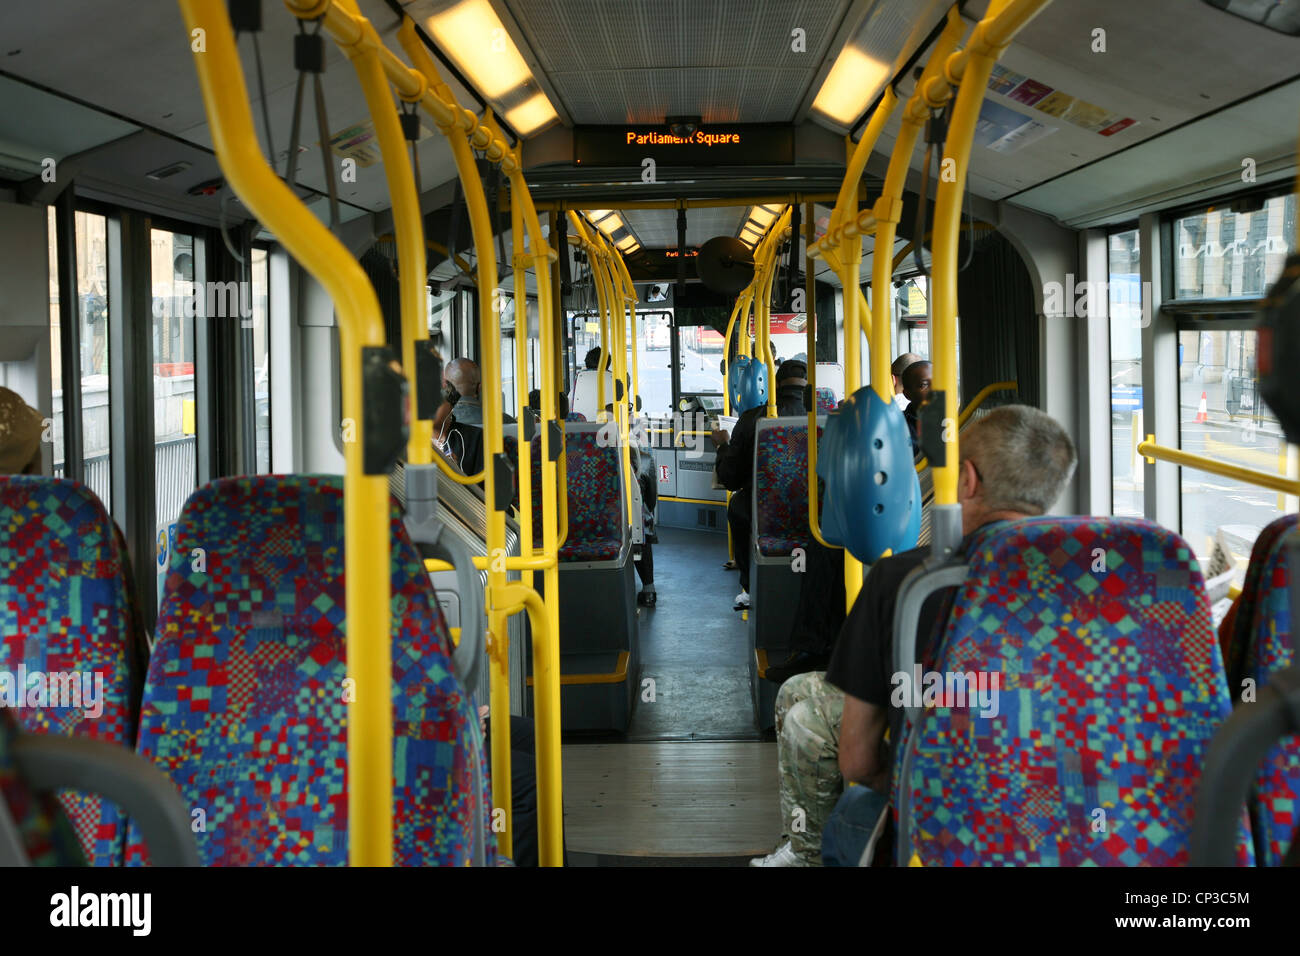 Share 69+ london bus interior